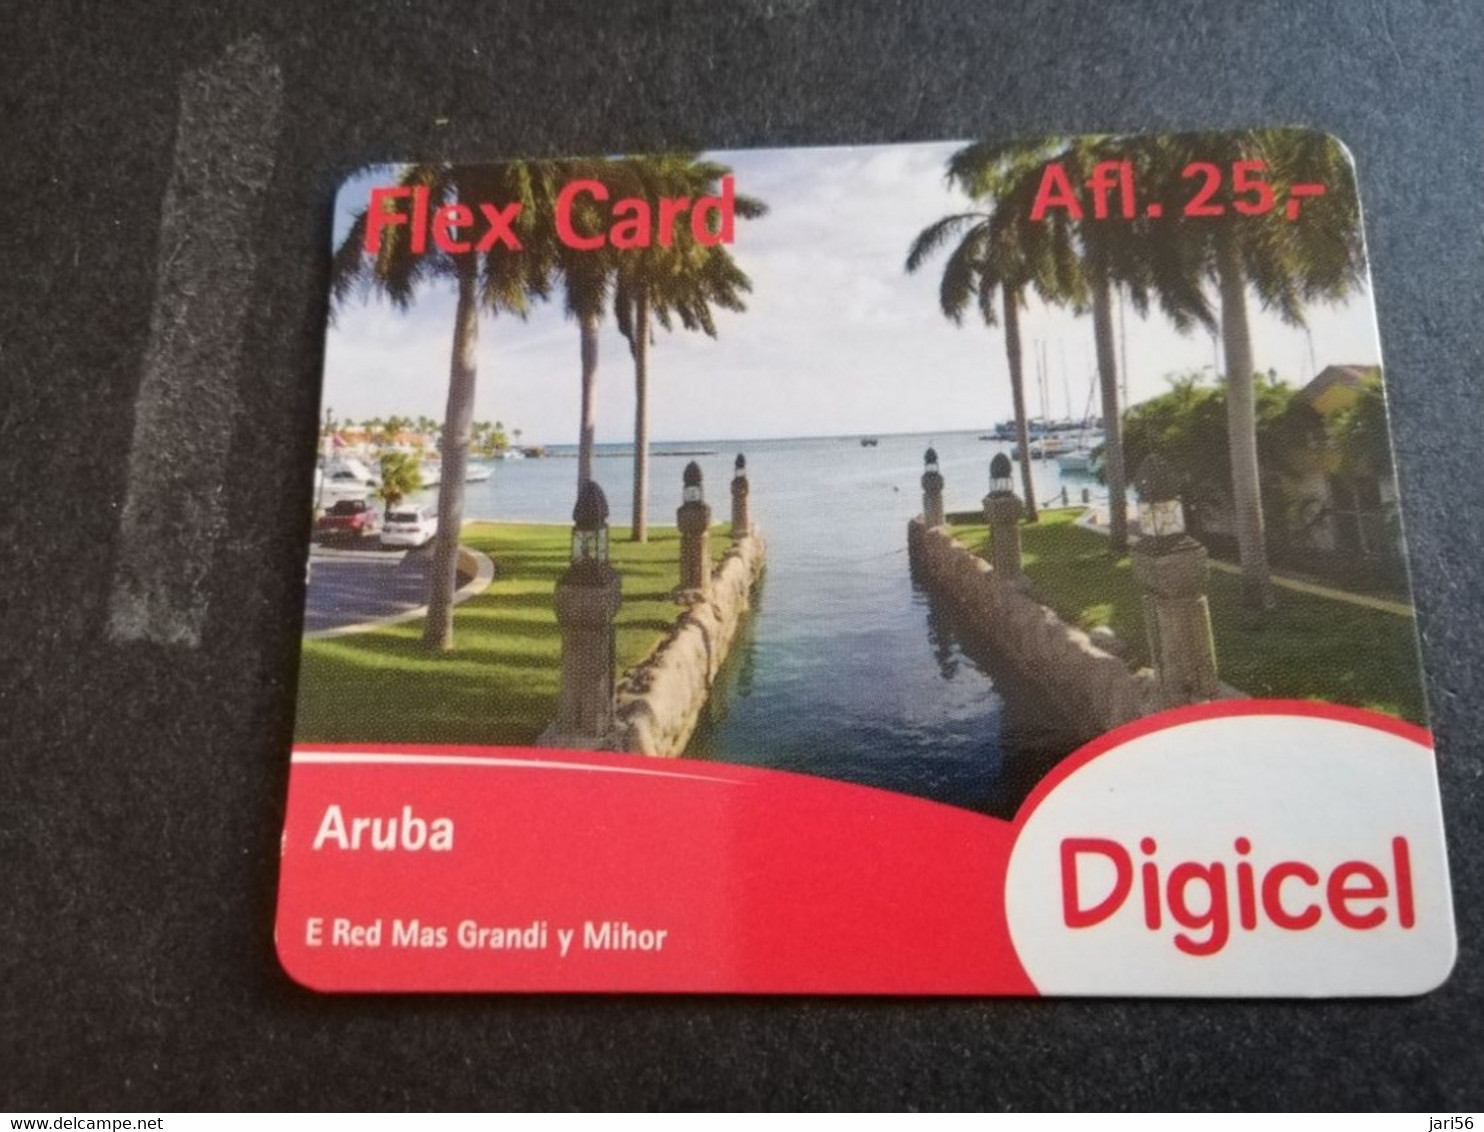 ARUBA PREPAID CARD FLEXCARD  DATE 24/12/2012  Look At Sea            AFL25,-    Fine Used Card  **4996** - Aruba